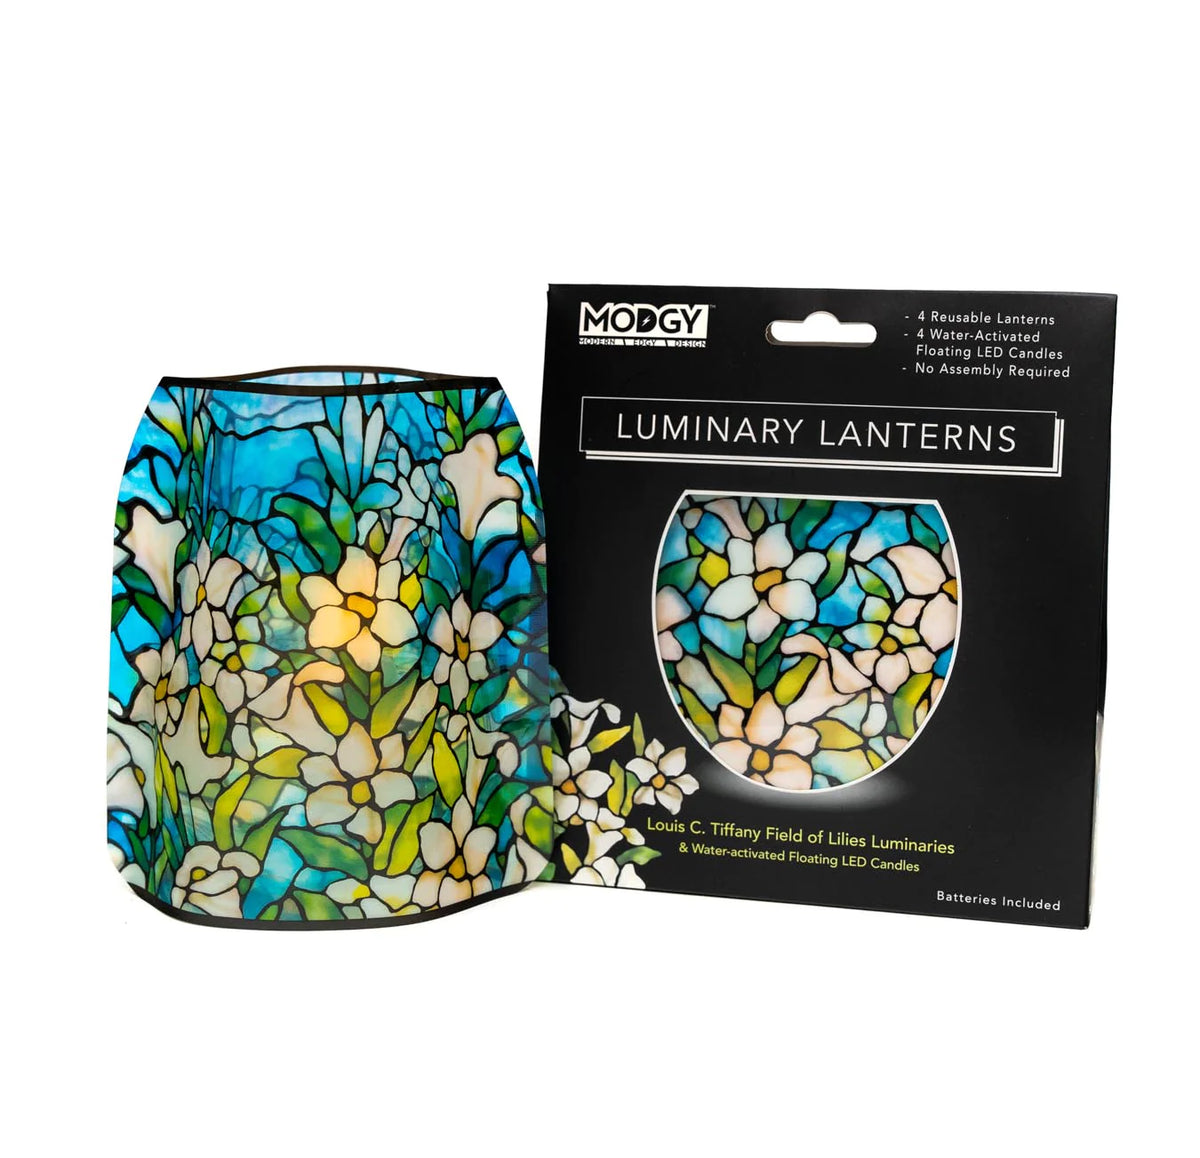 Louis C. Tiffany Field of Lilies Luminary Lanterns